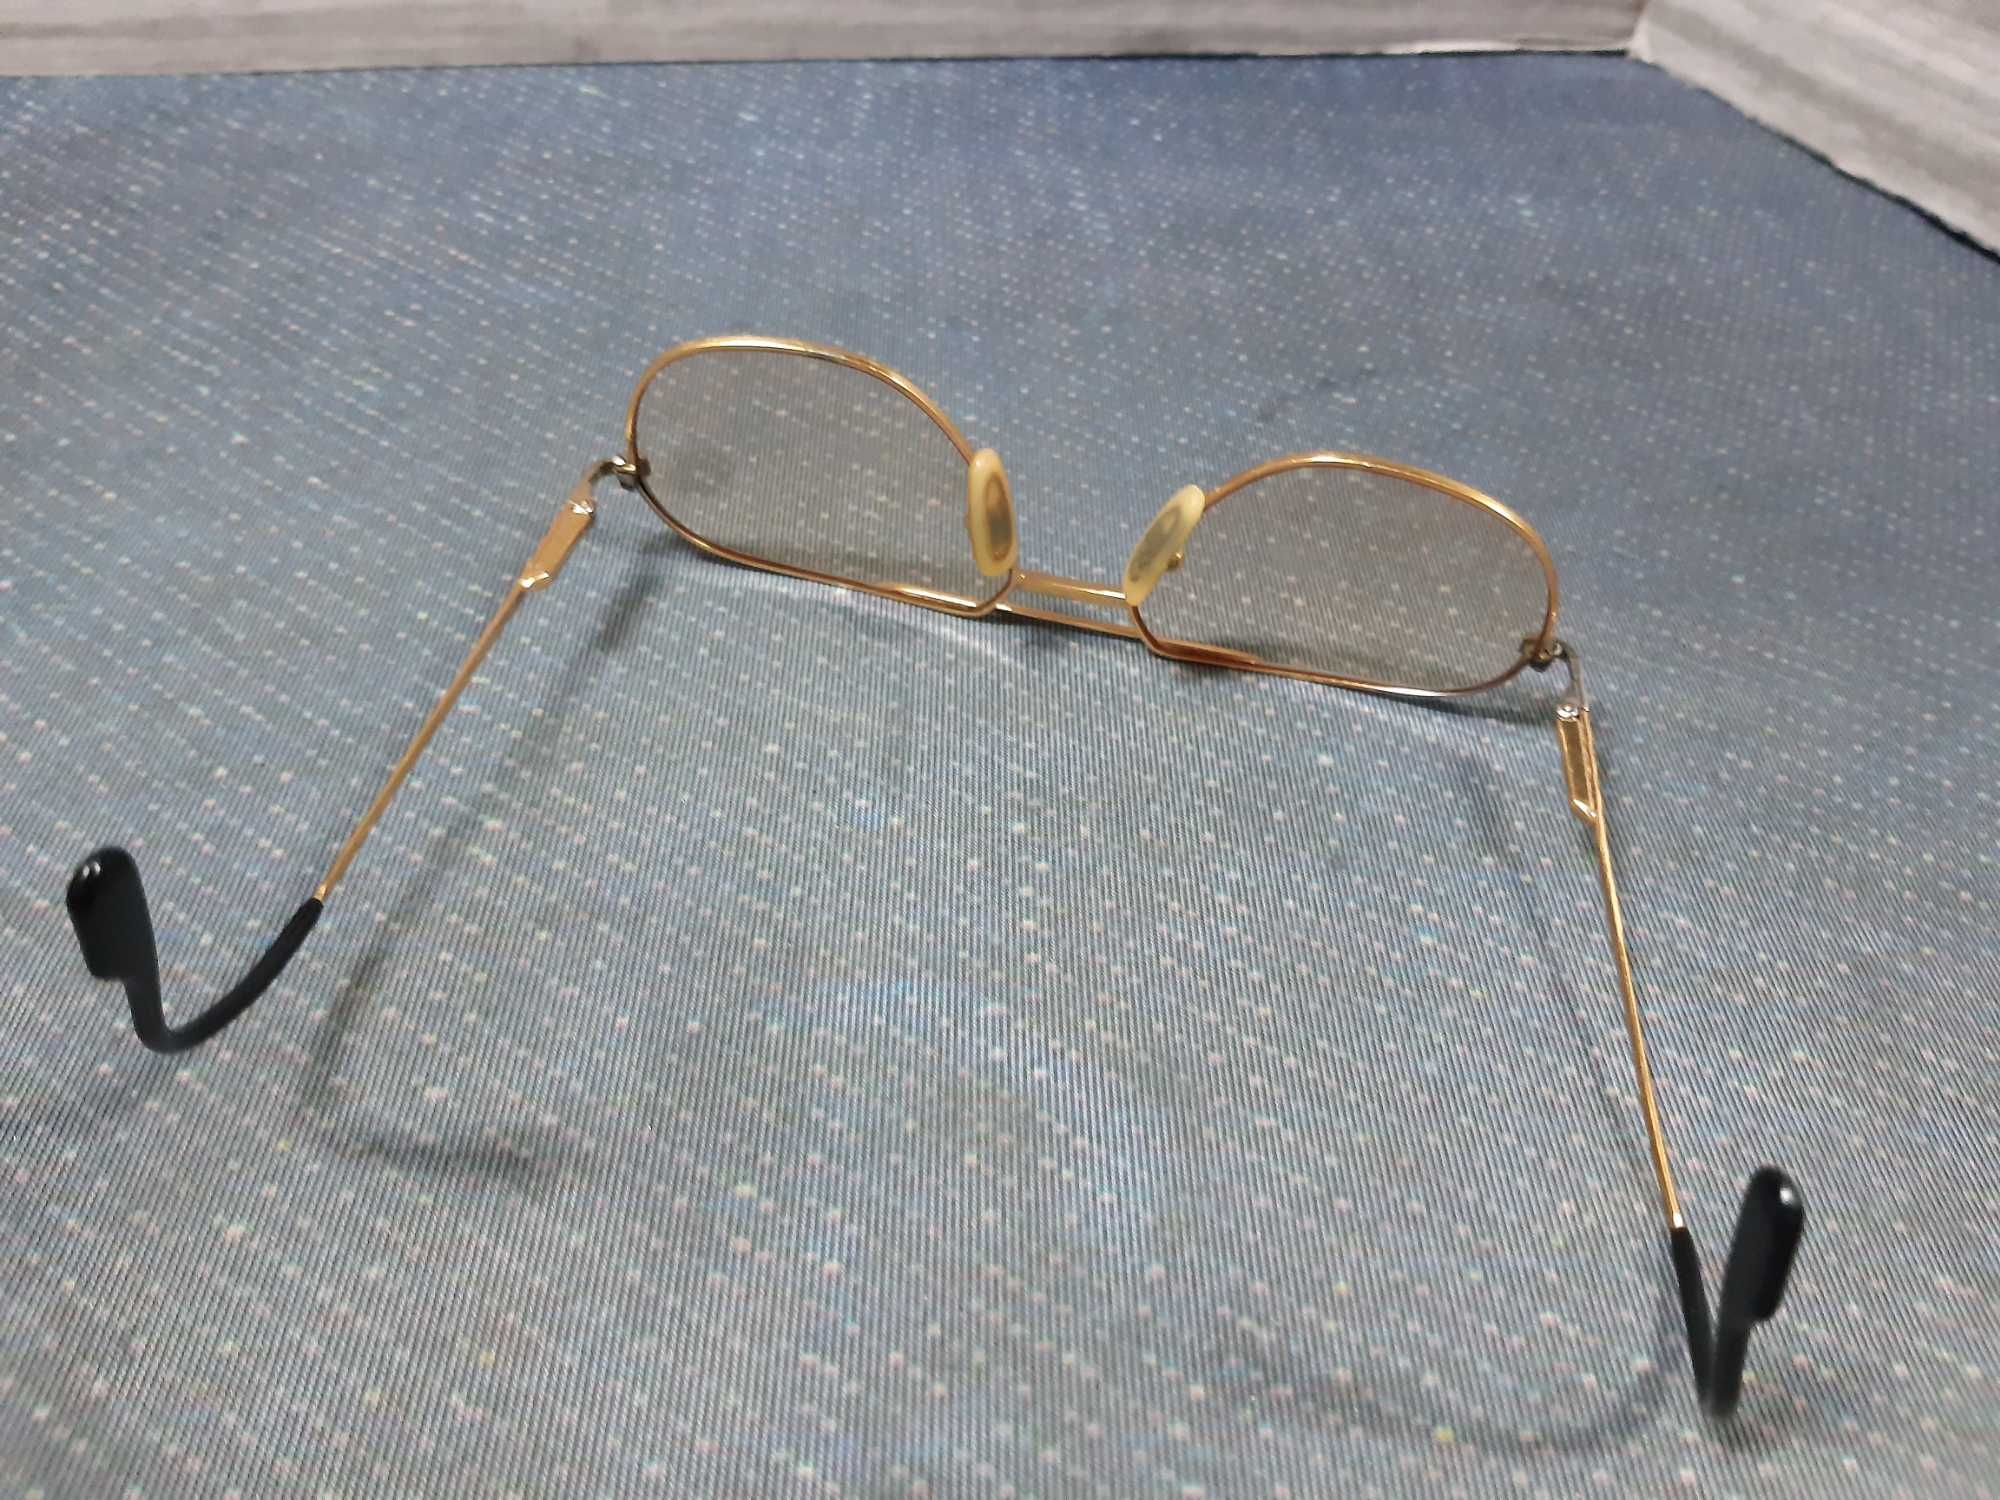 Óculos Vintage usados, Tiffany Lunettes Made In Italy,